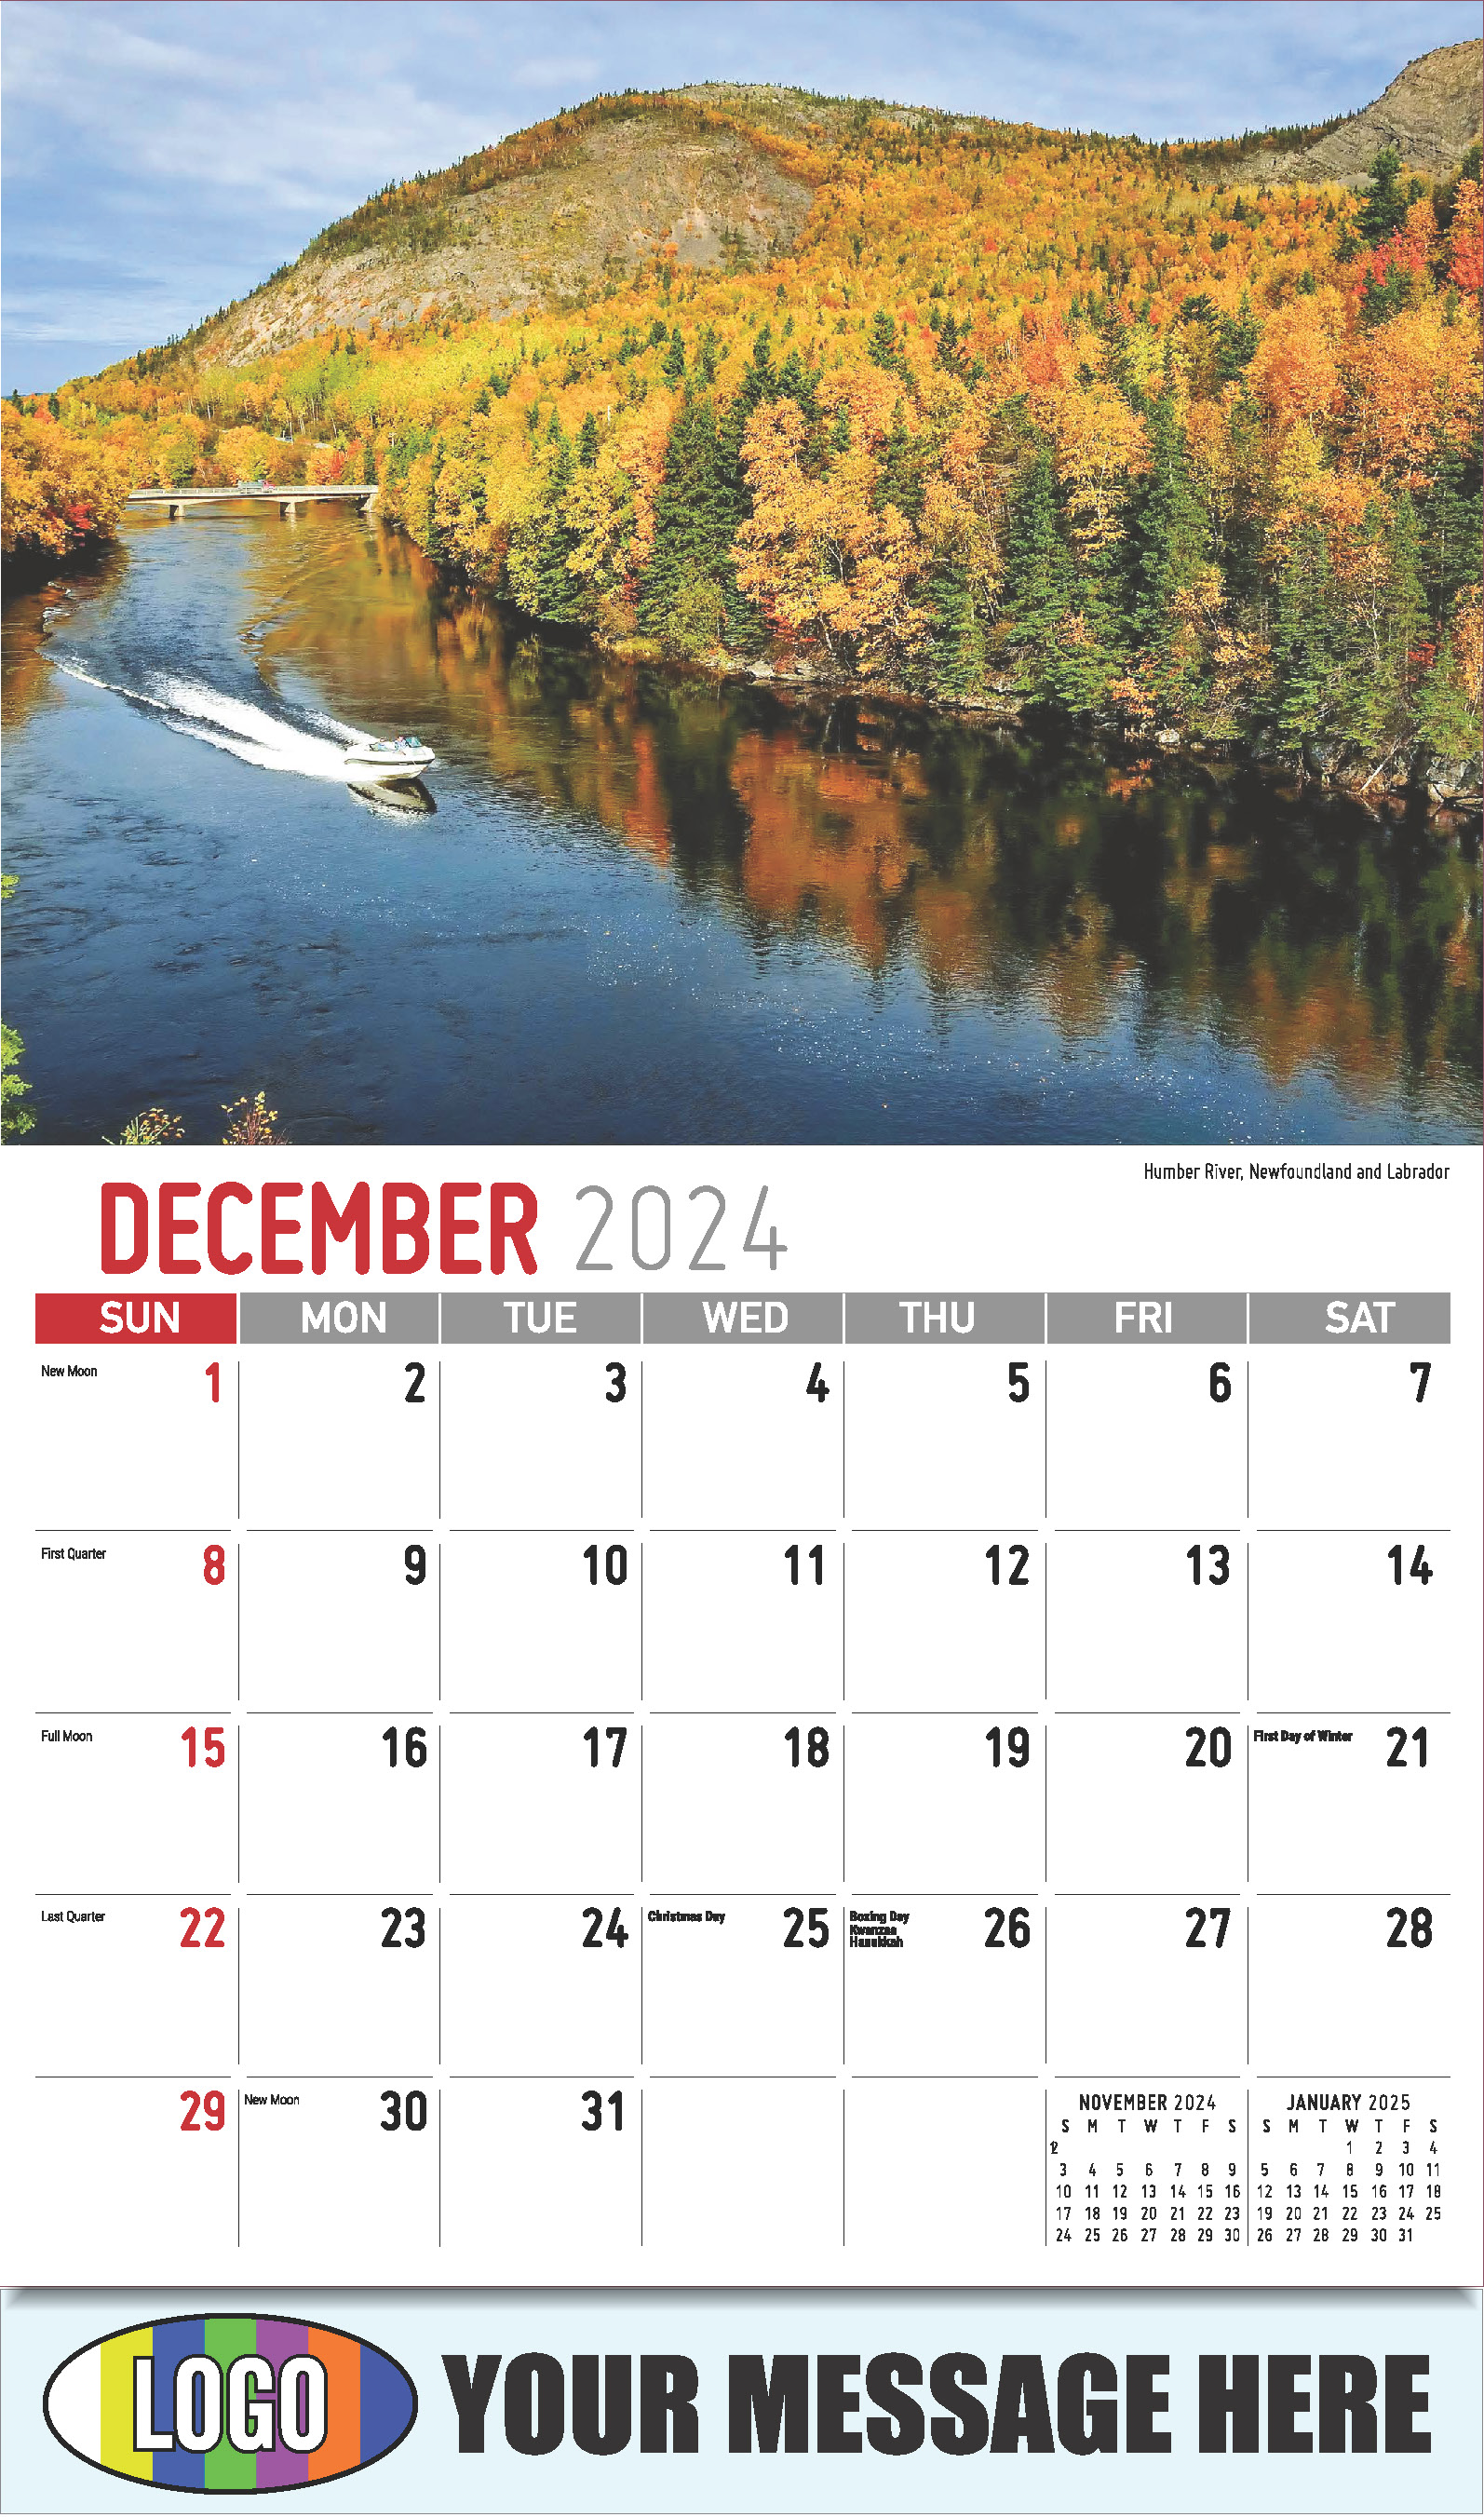 Atlantic Canada Scenic 2025 Business Promotion Calendar - December_a